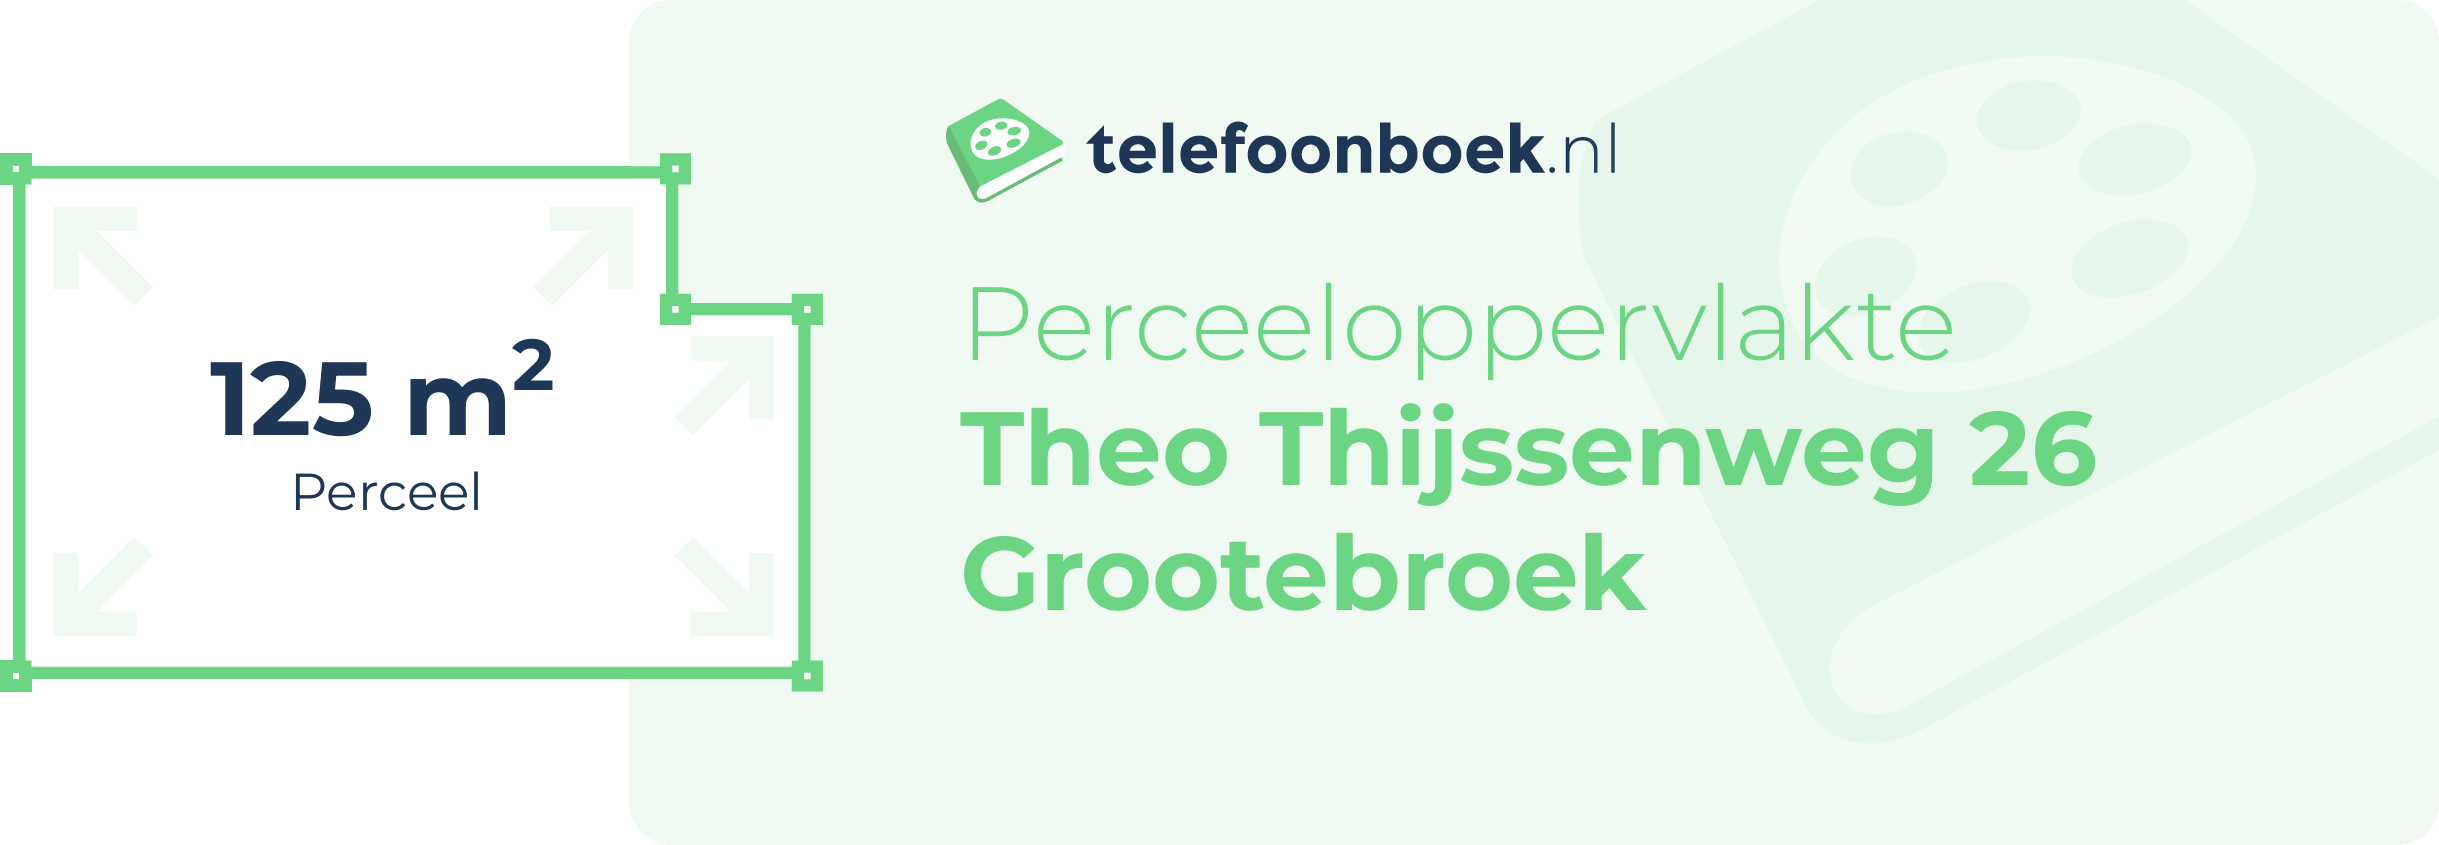 Perceeloppervlakte Theo Thijssenweg 26 Grootebroek